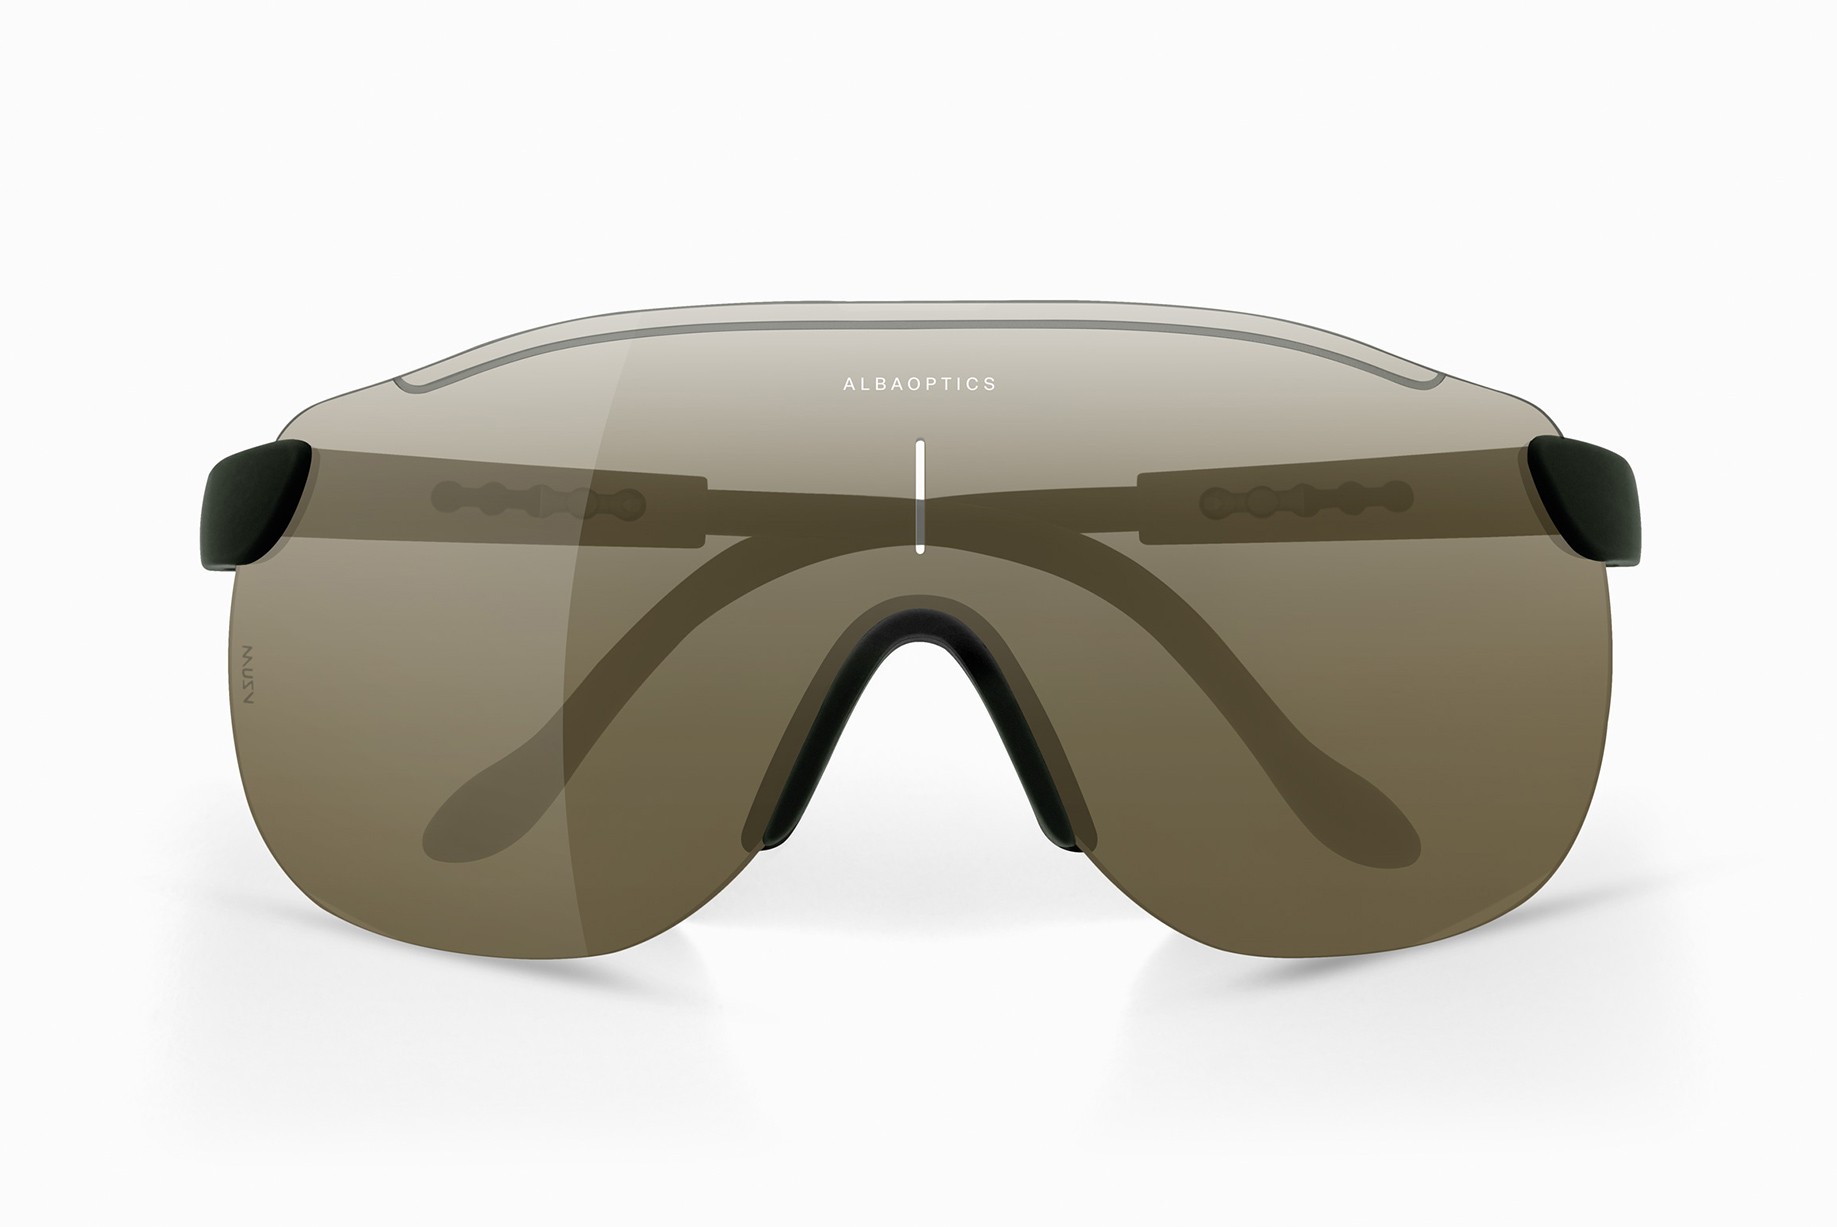 Alba optics stratos lunettes de cyclisme noir - vzum mr bronze lens